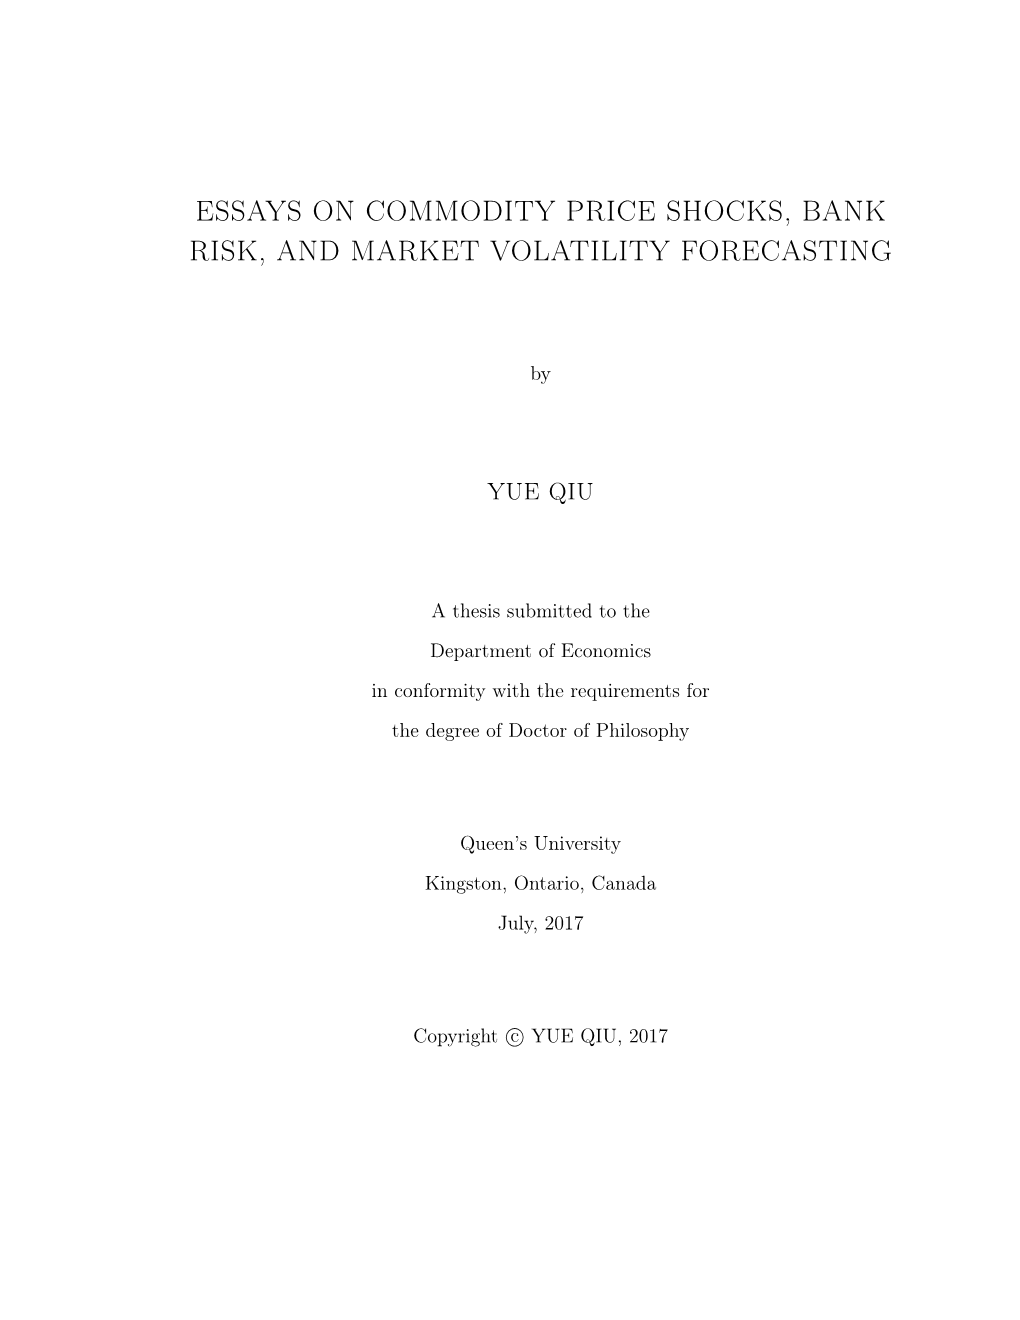 Essays on Commodity Price Shocks, Bank Risk, and Market Volatility Forecasting